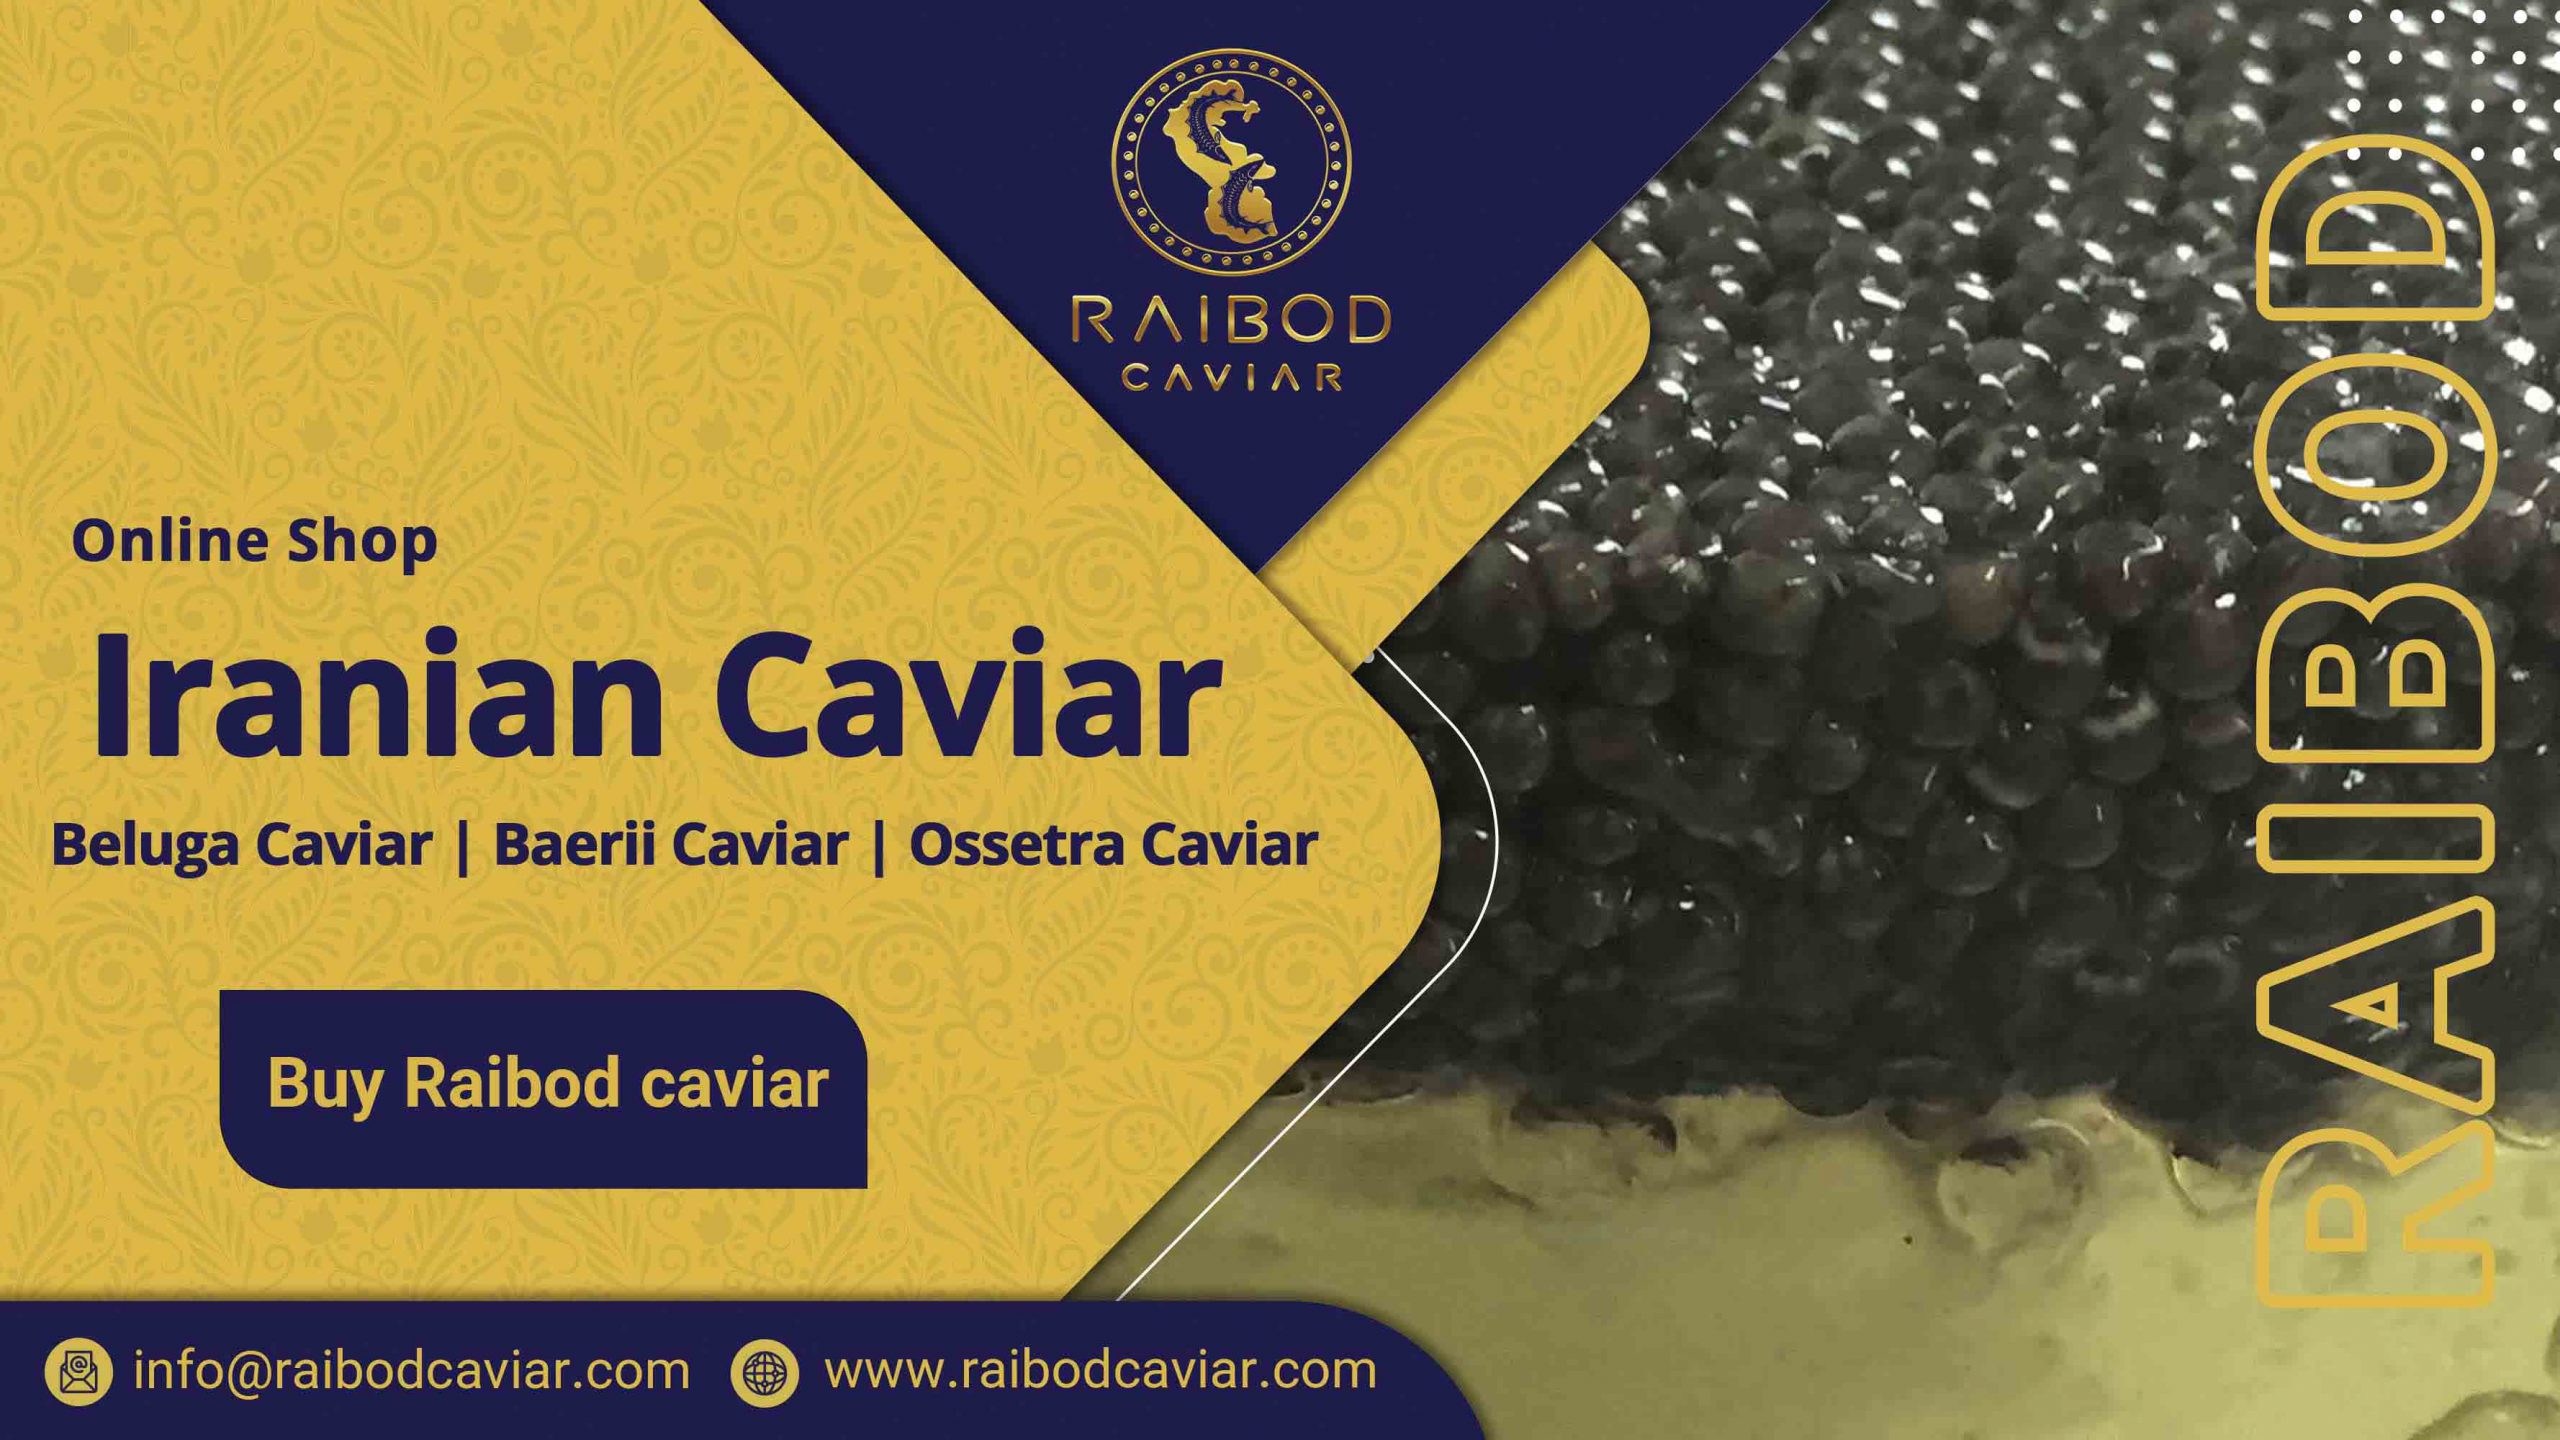 Iranian caviar supplier